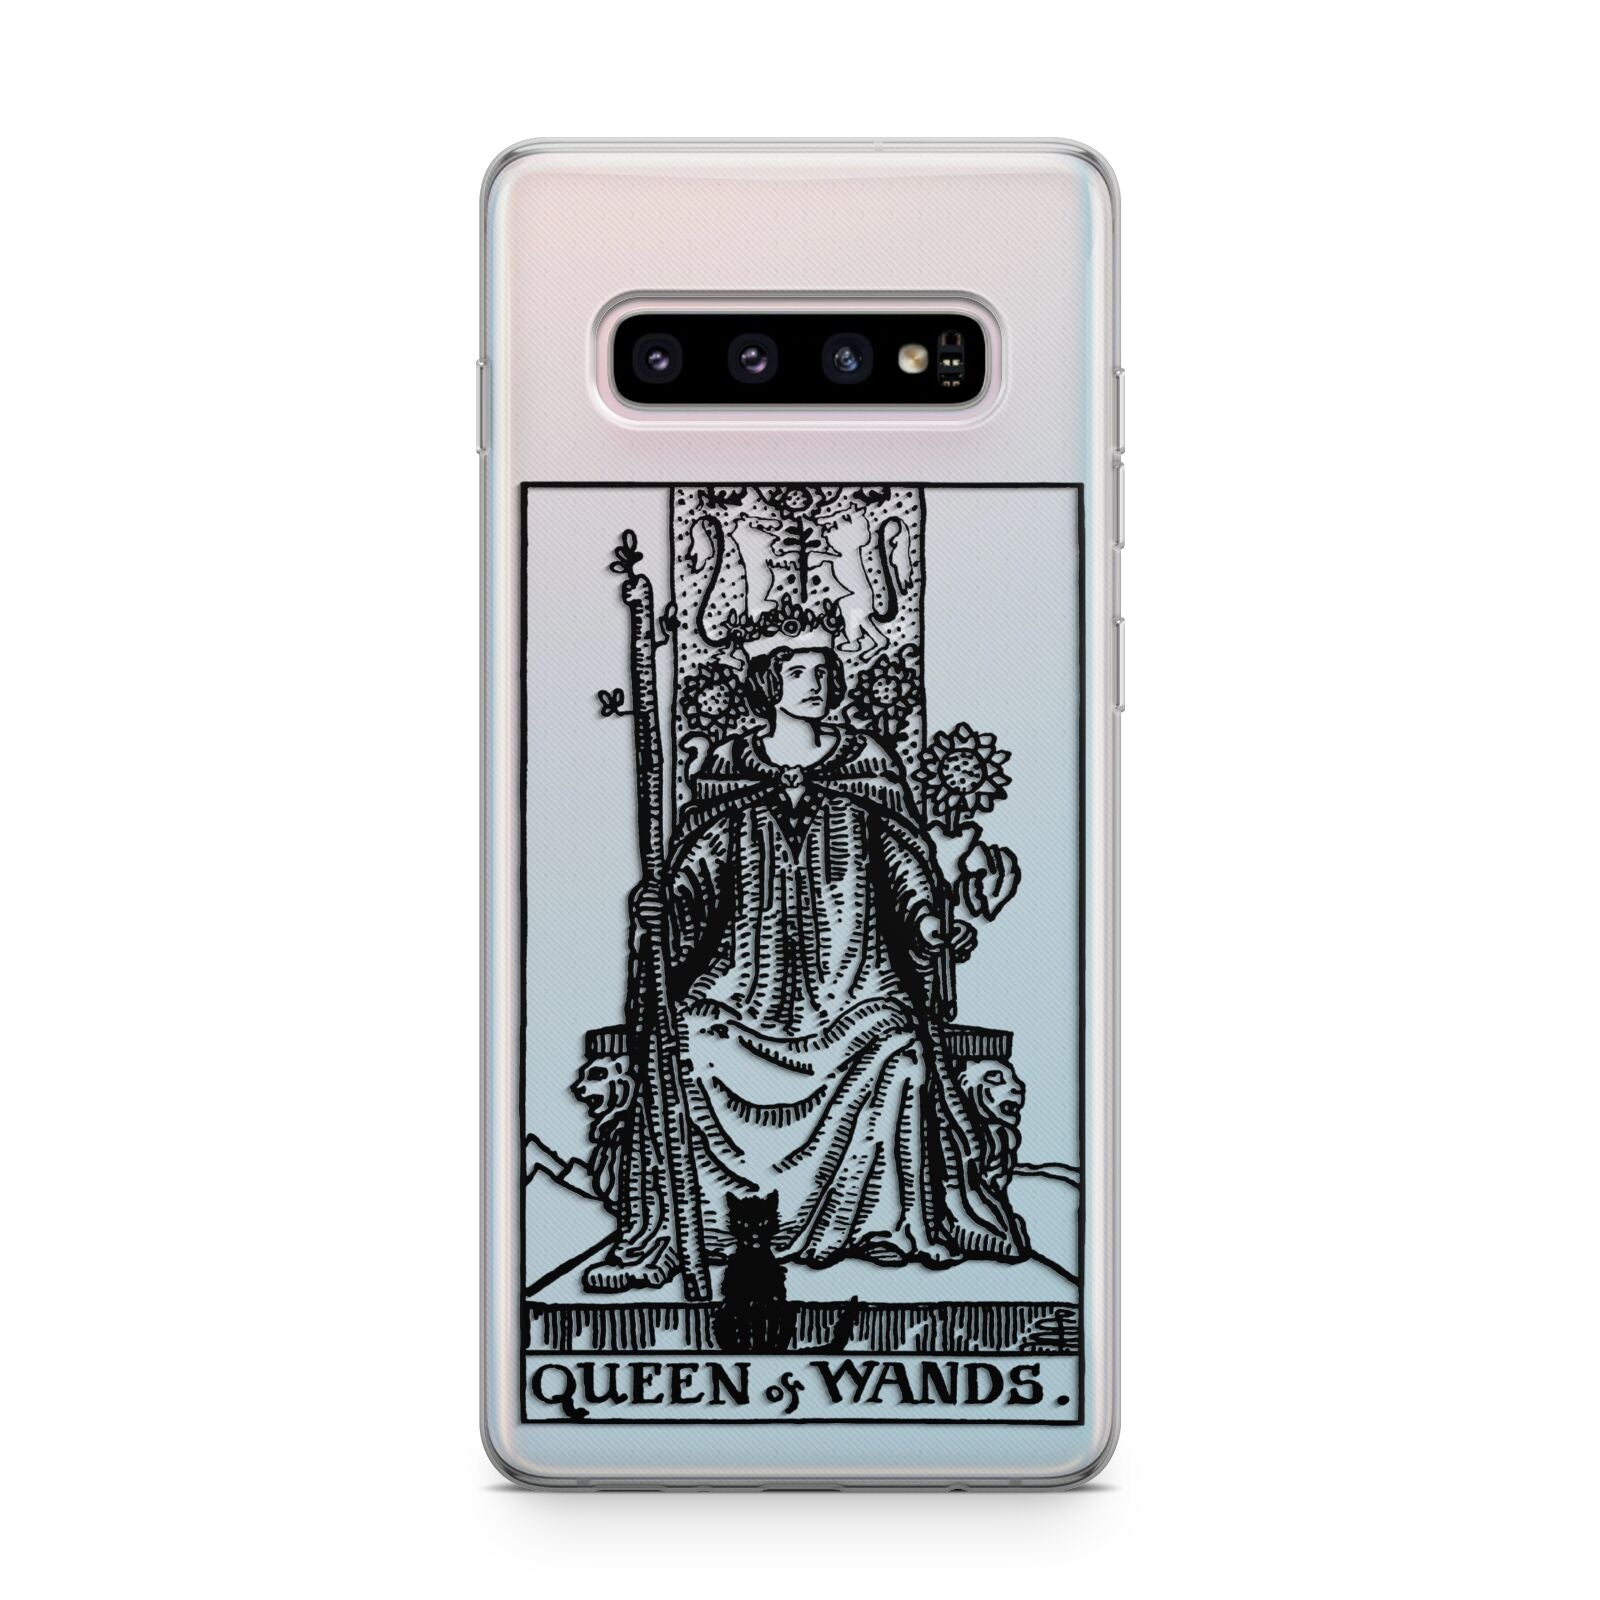 Queen of Wands Monochrome Samsung Galaxy S10 Plus Case